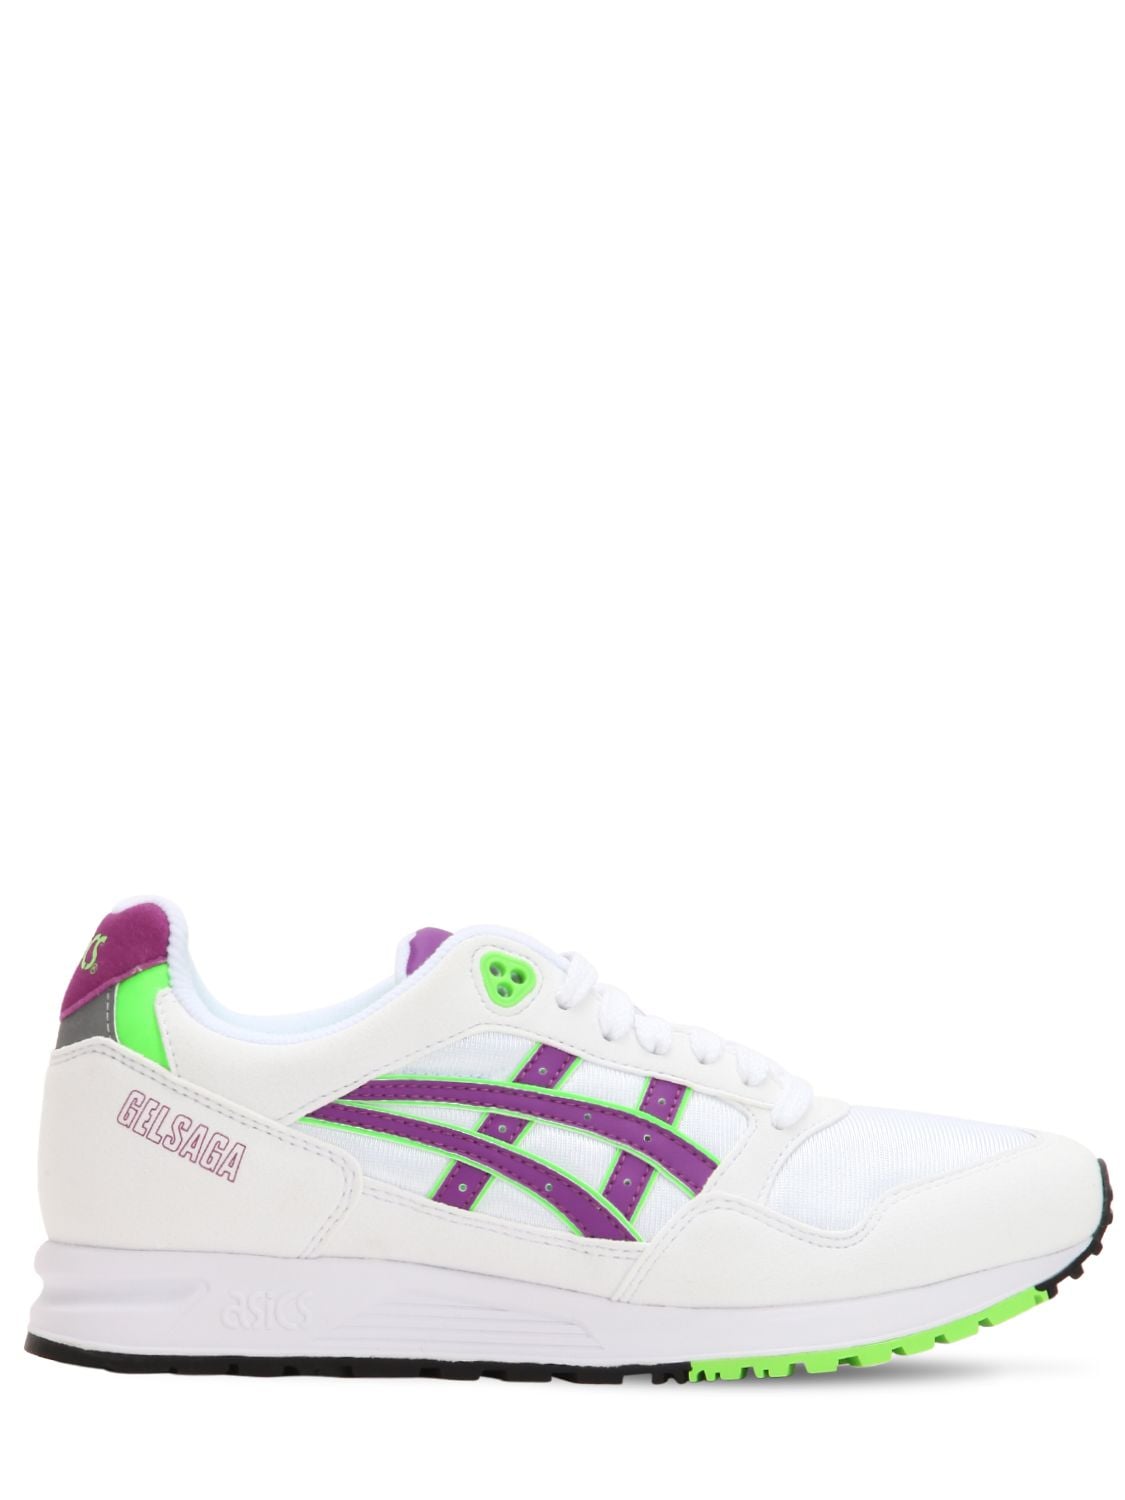 Asics Gel Saga Running Sneakers In White,purple